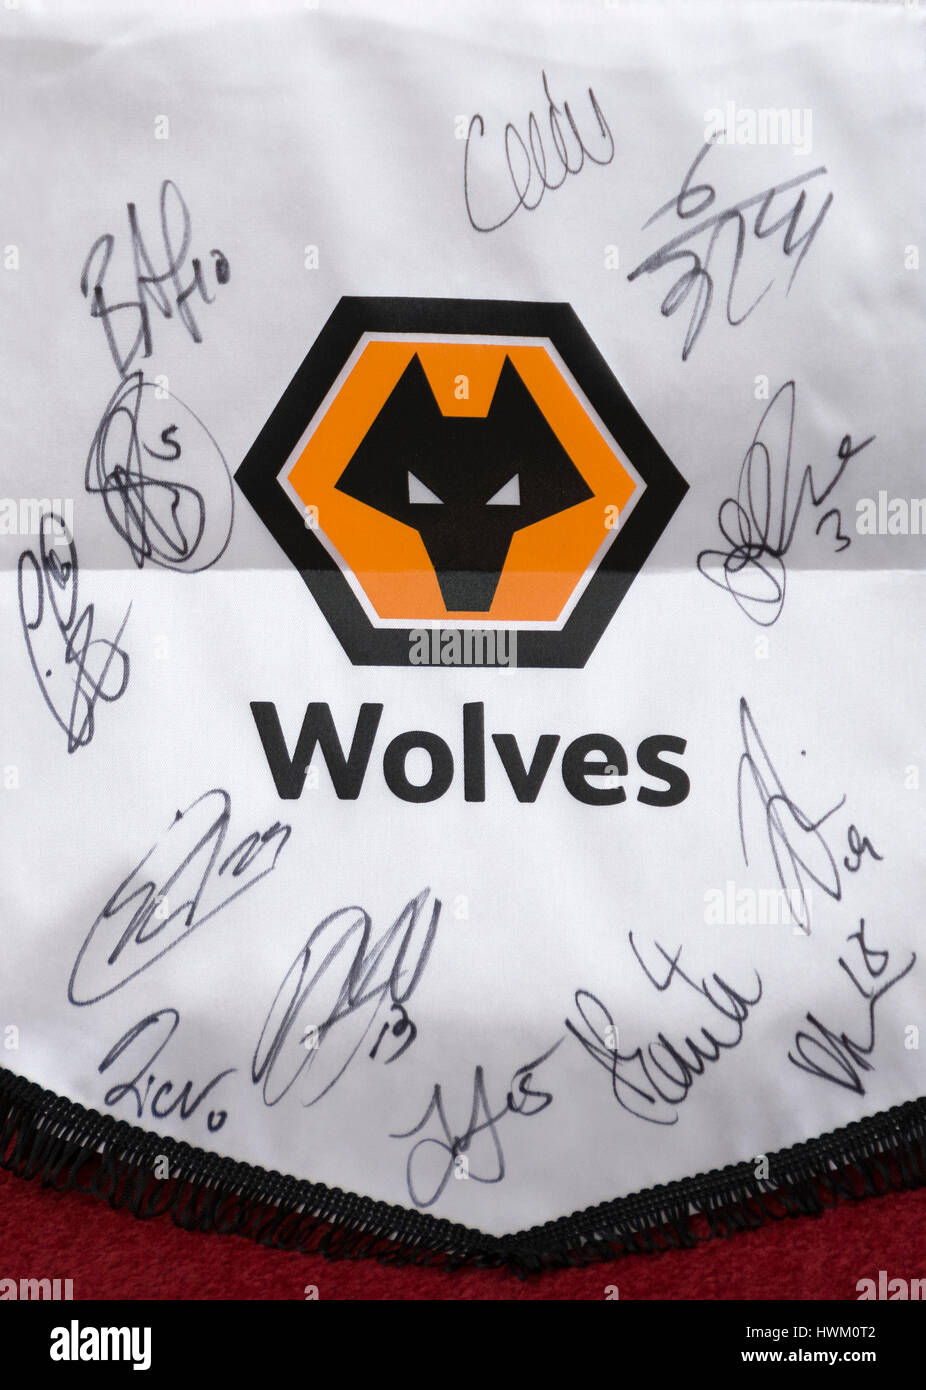 Wolverhampton Wanderers Football Club logo and players signatures Stock Photo